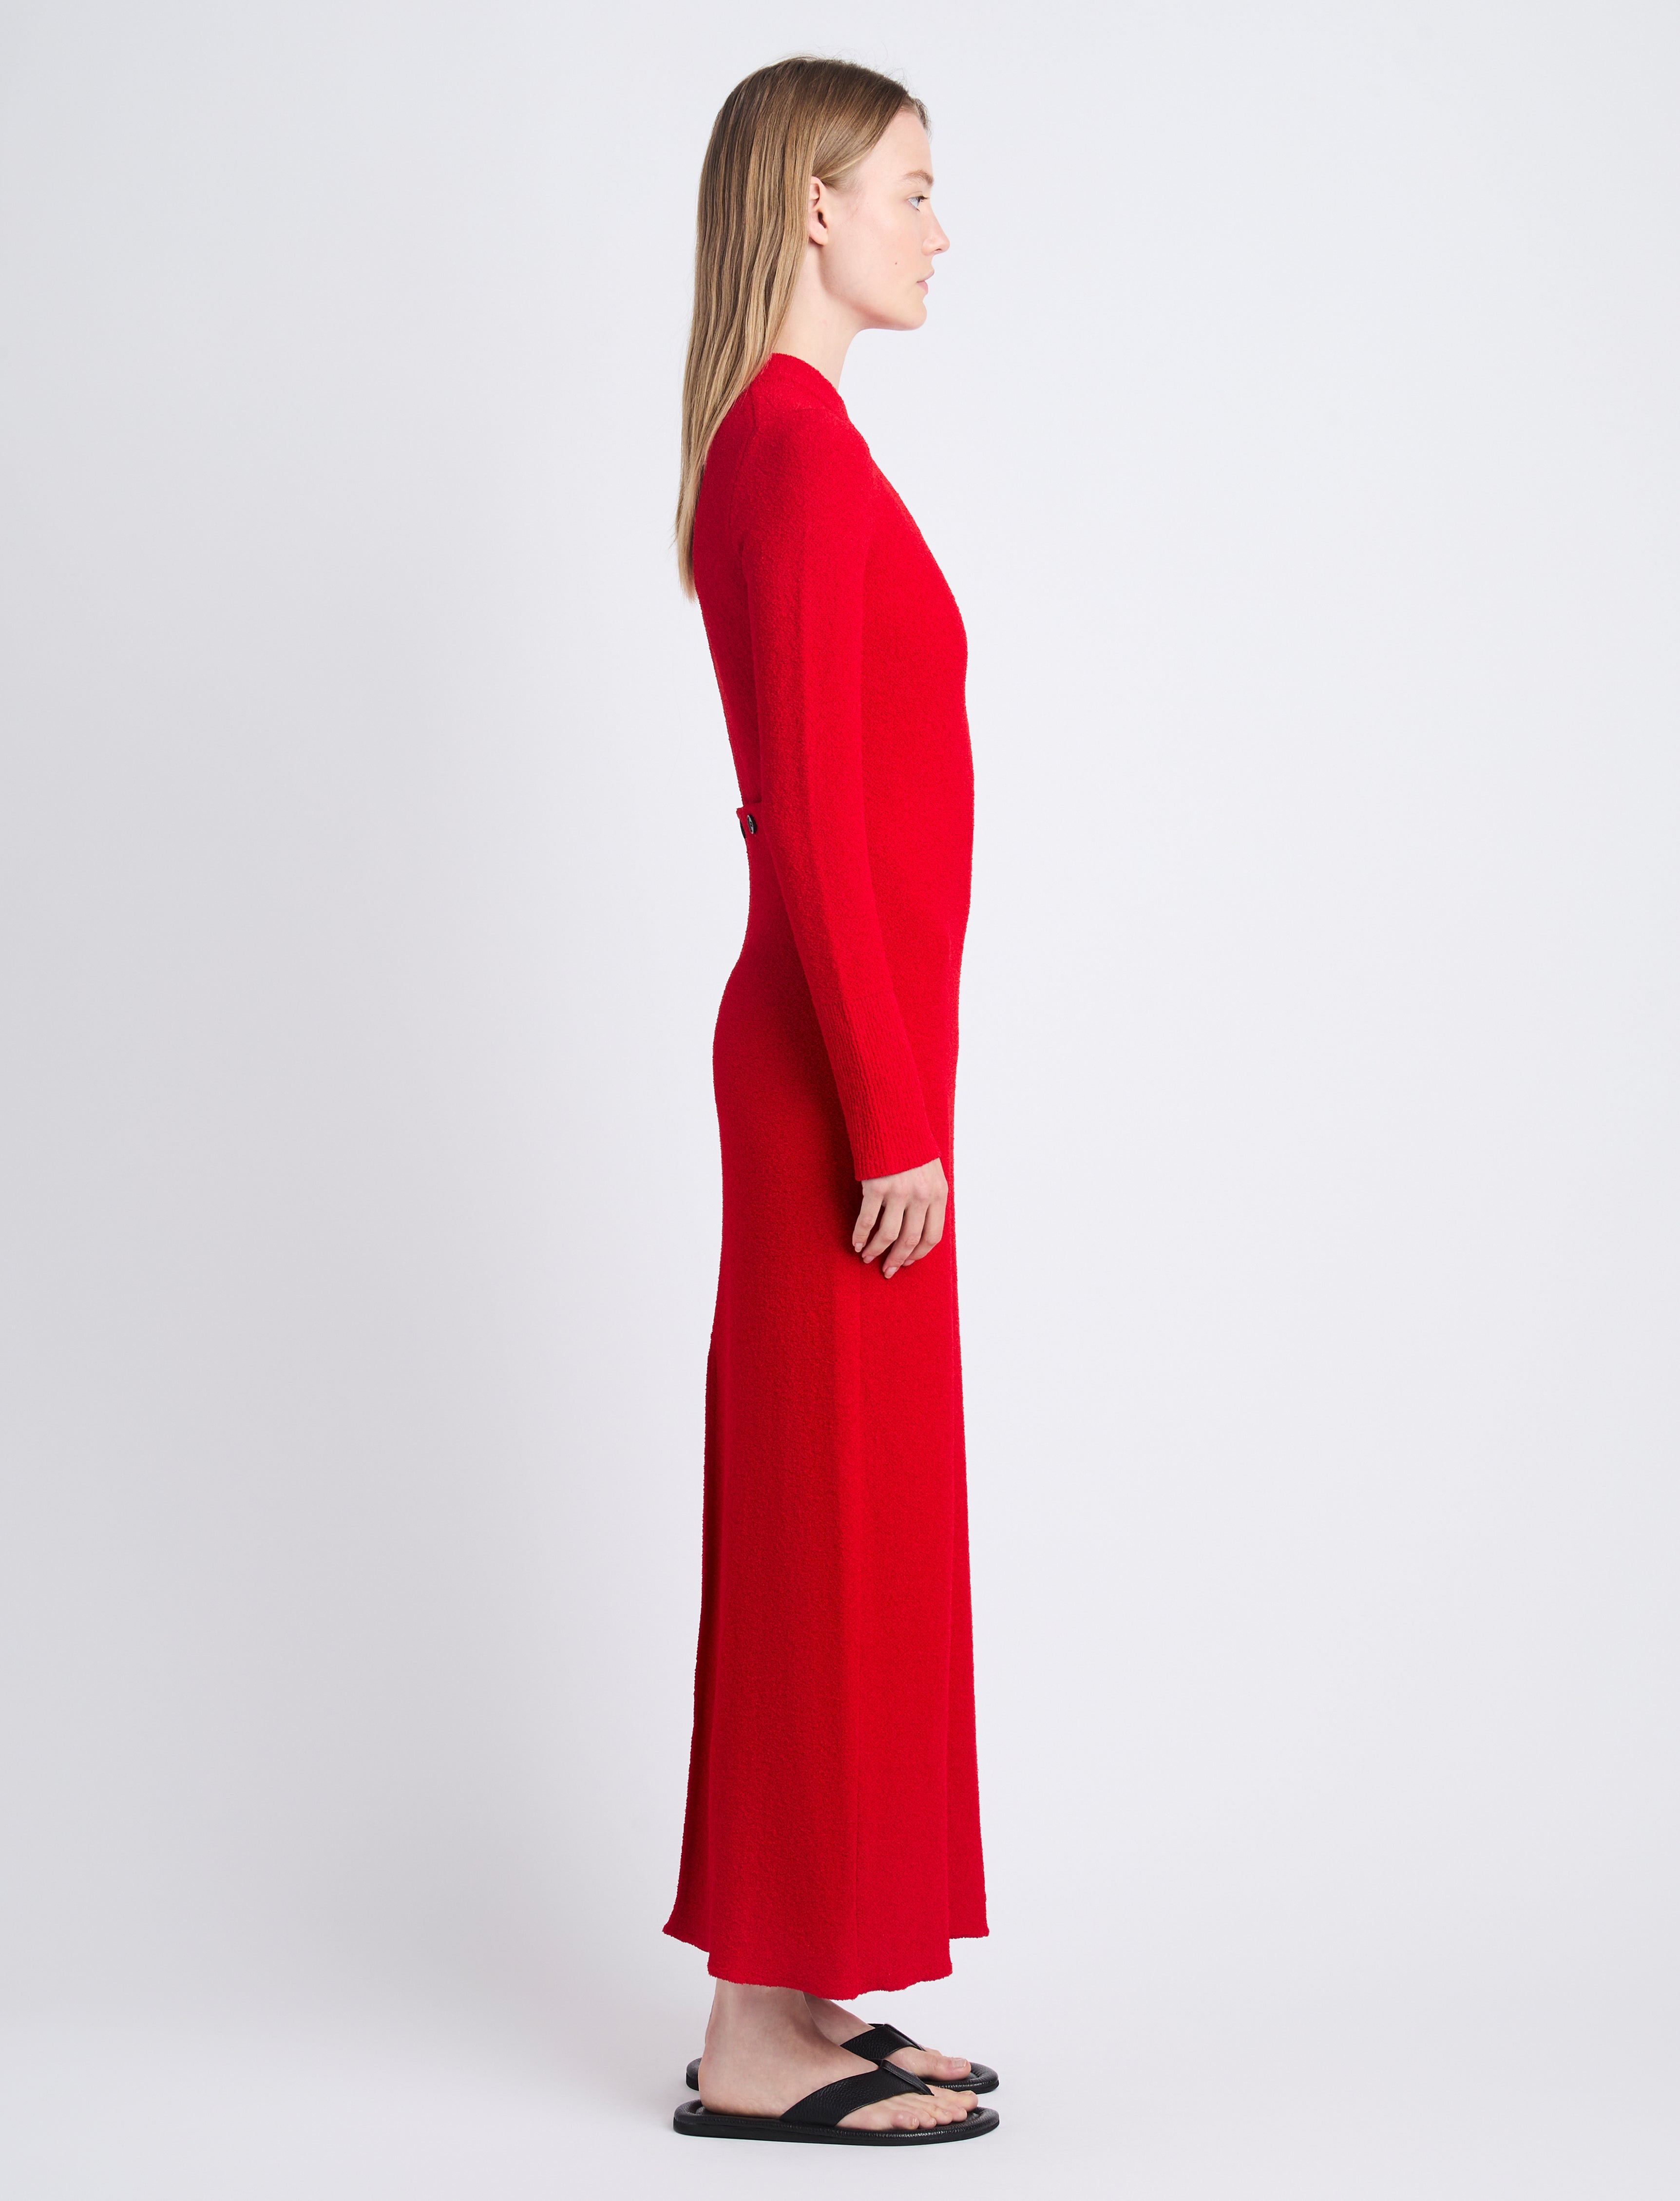 Lara Knit Dress in Viscose Boucle - 4